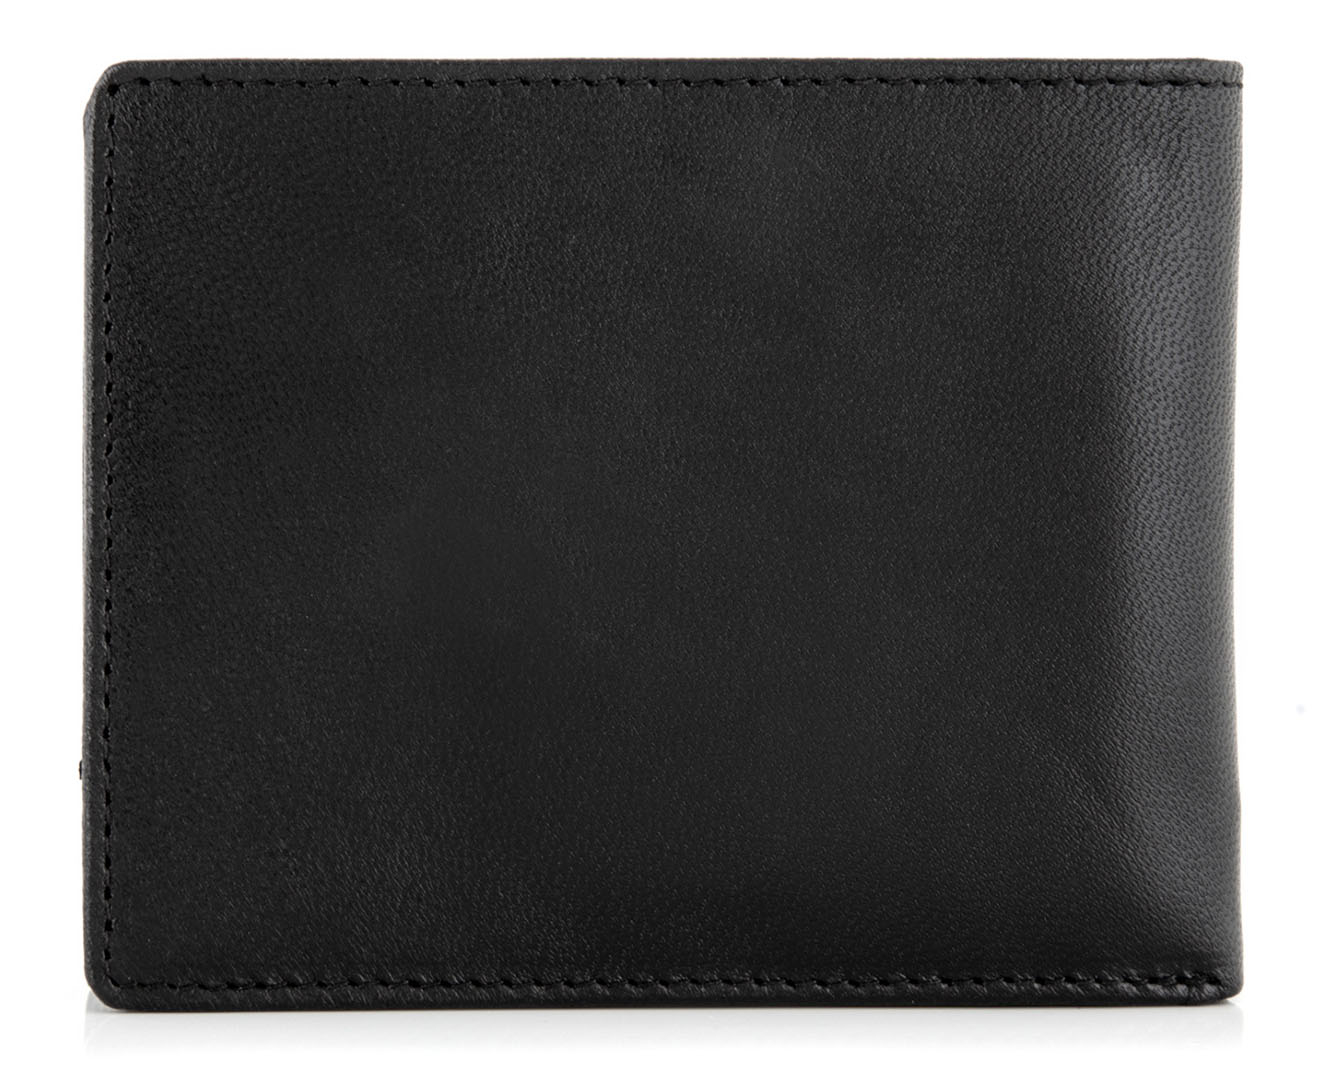 Geoffrey Beene Leather Bifold Wallet - Black | Catch.com.au